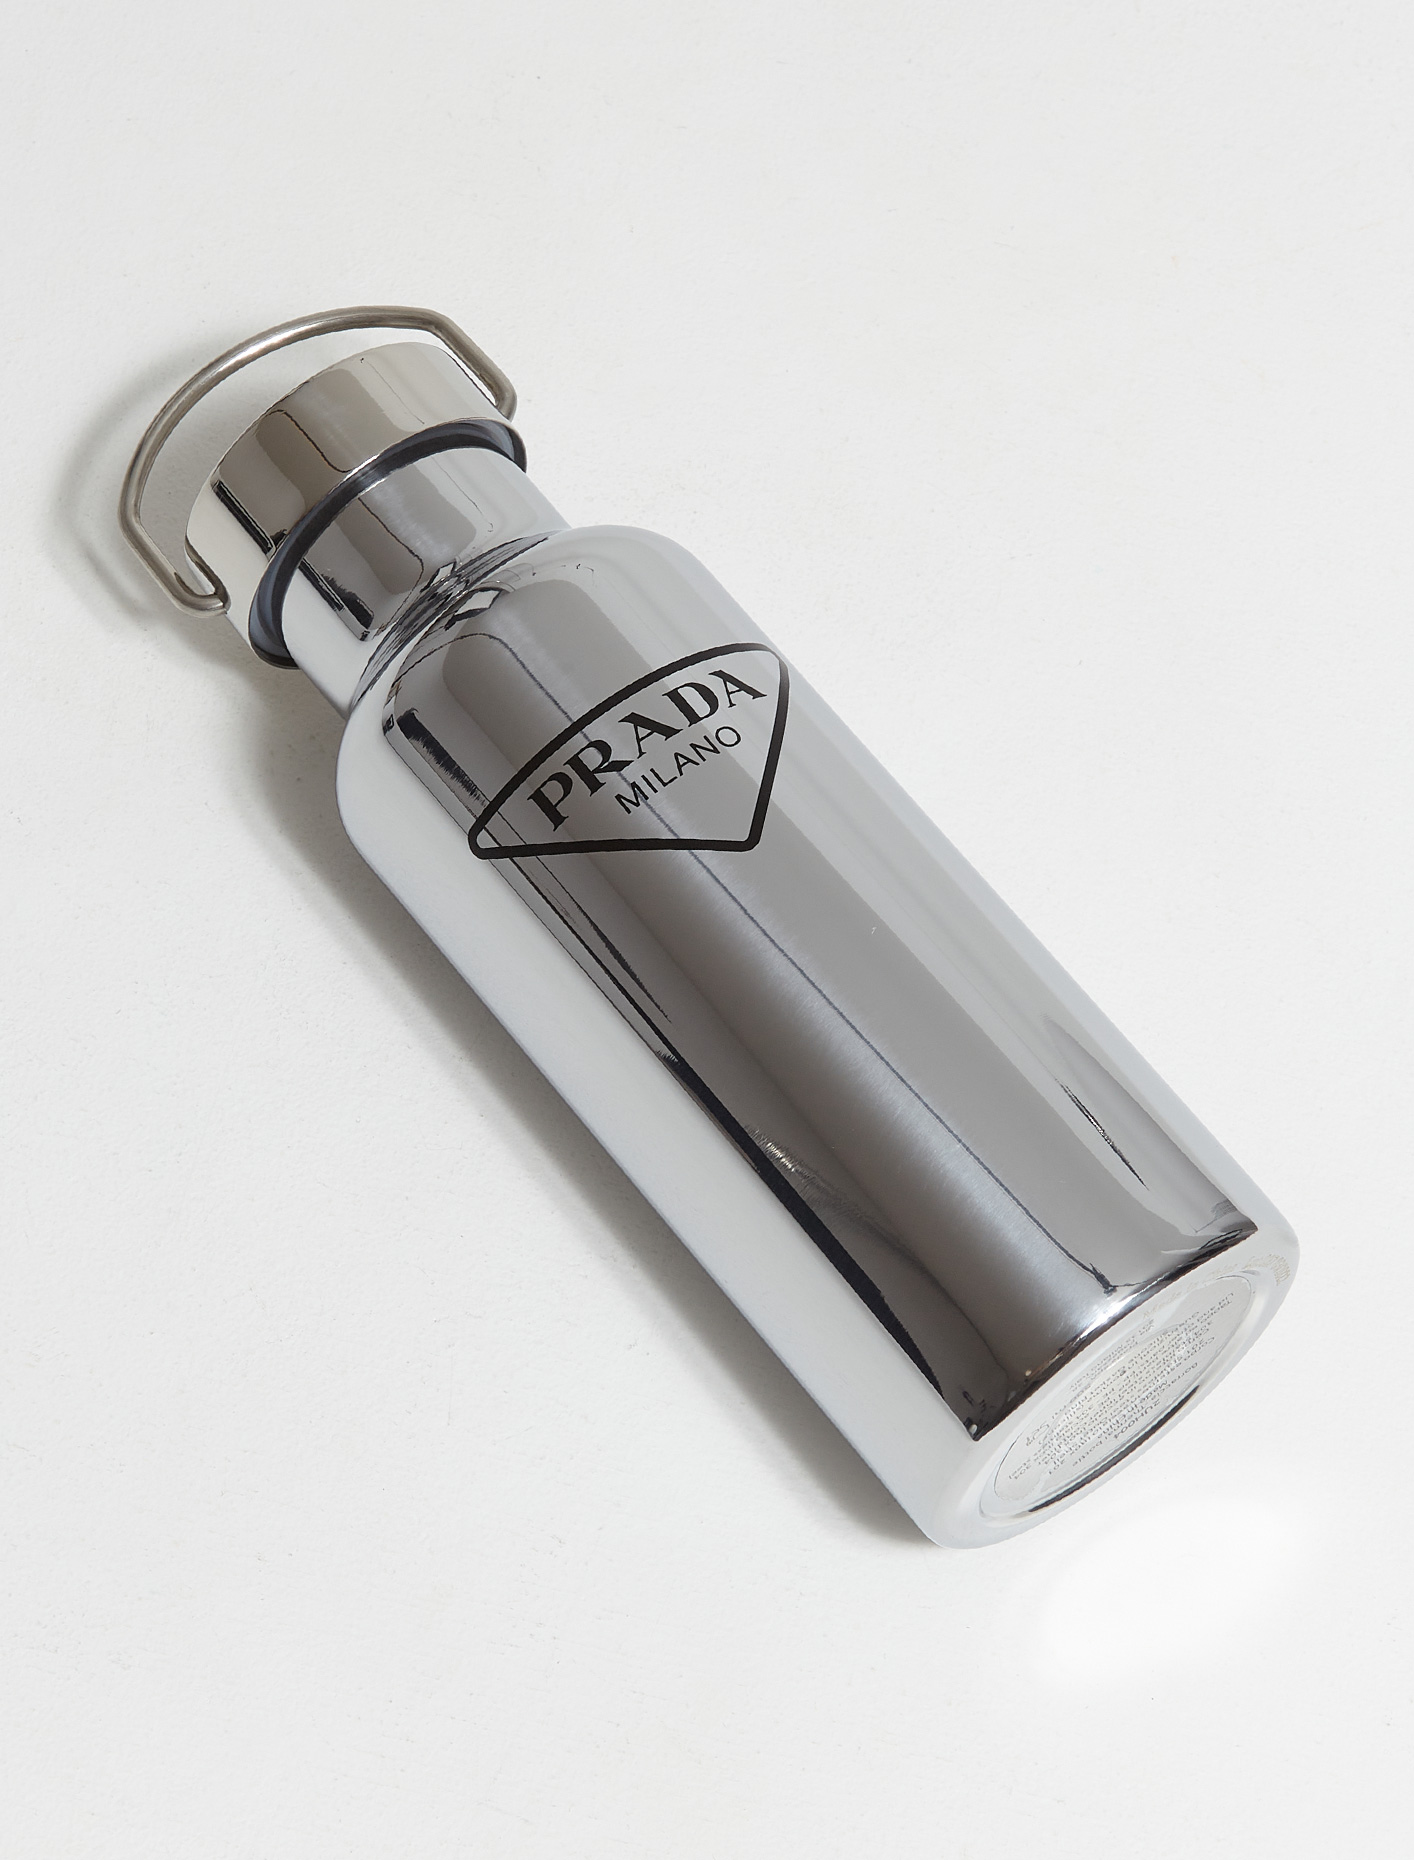 Prada Stainless Steel Water Bottle in Silver and Black | Voo Store